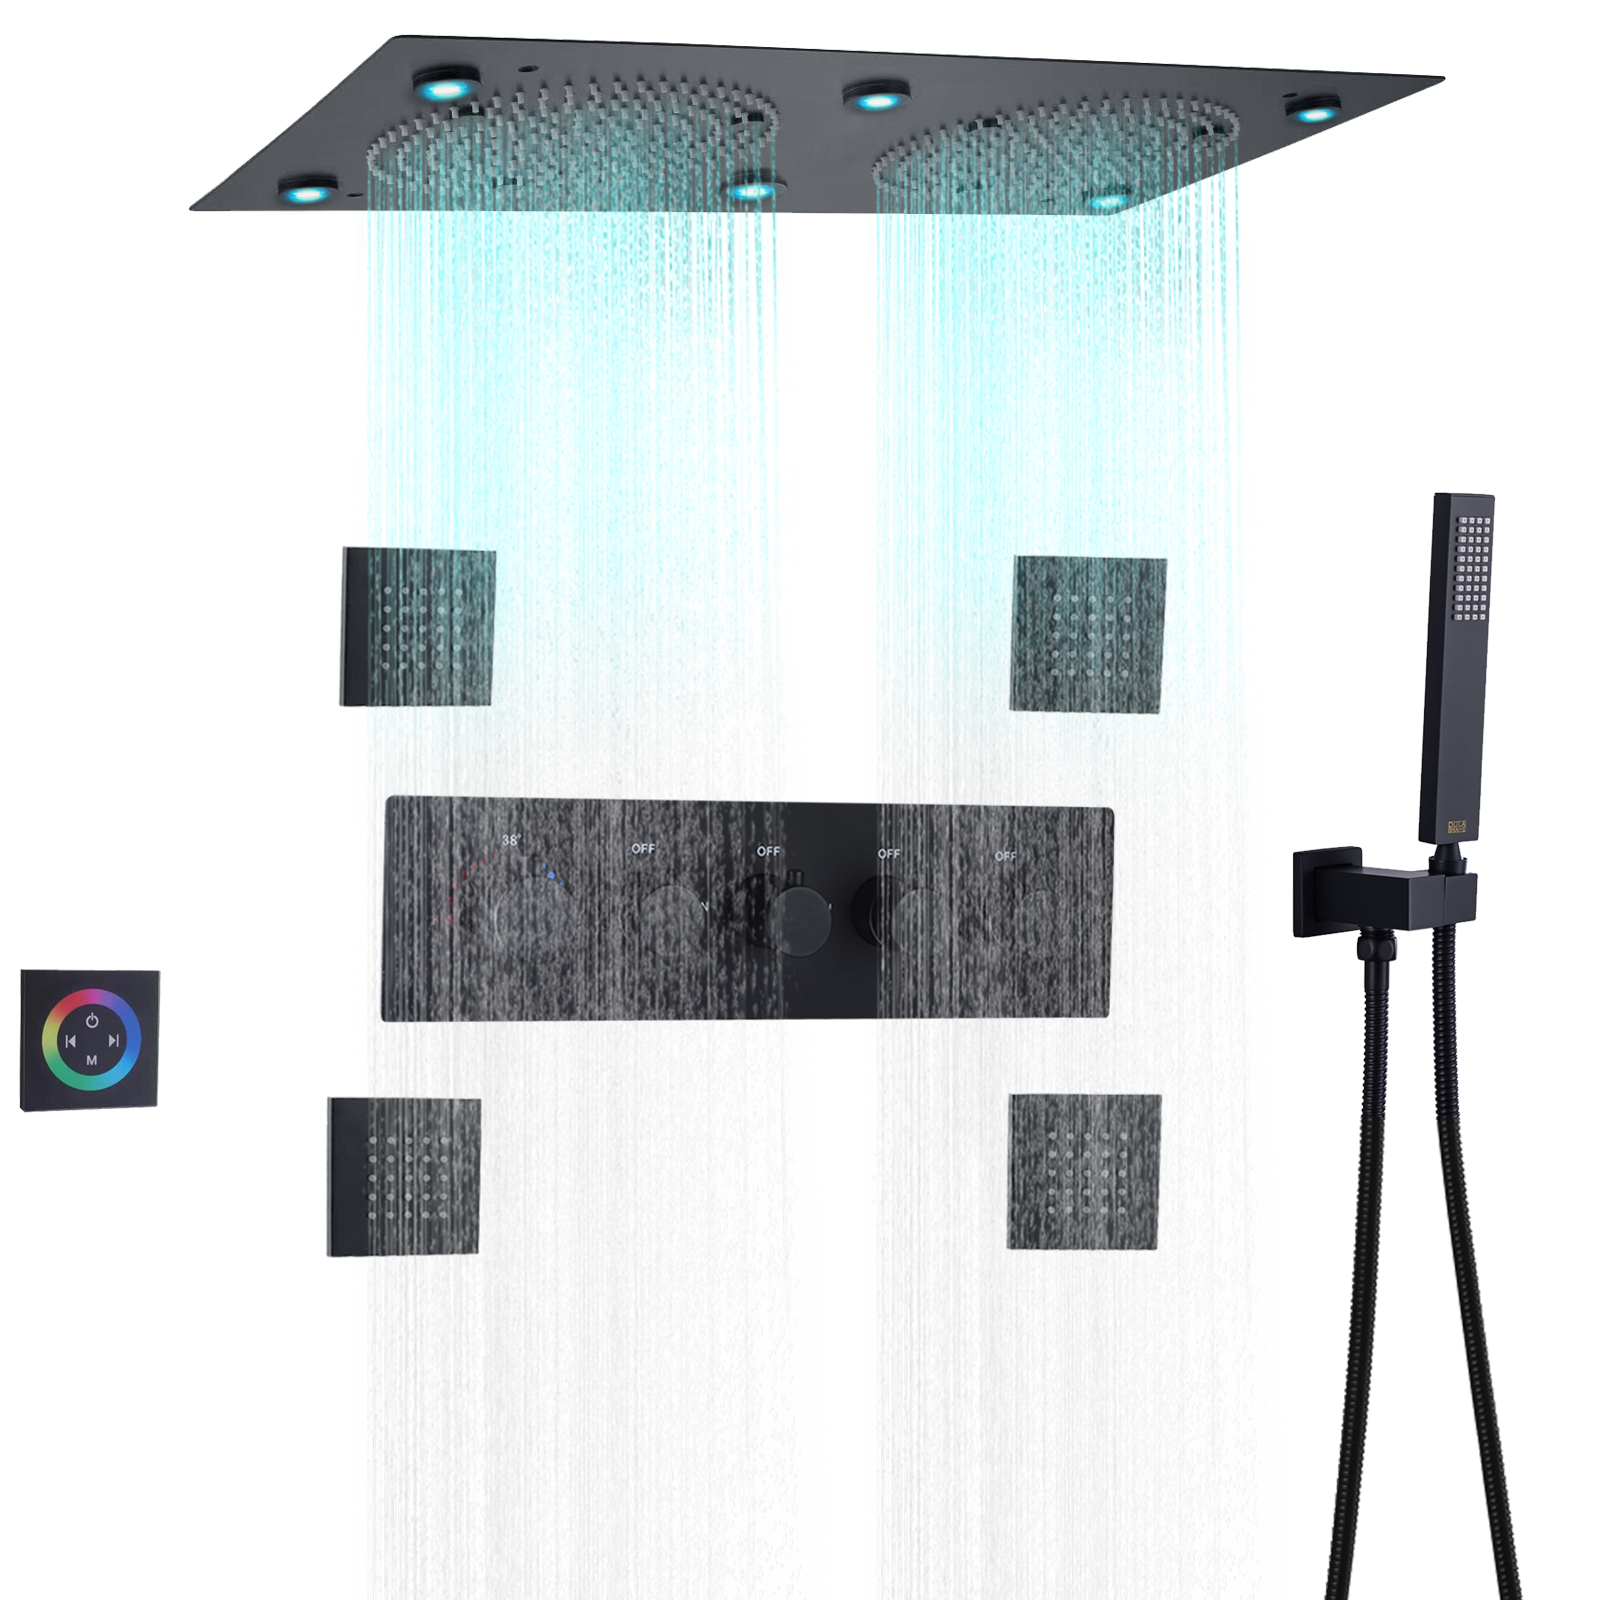 Matte Black LED Shower Faucet Bathroom Thermostatic Rainfall Handheld Shower Arm Douche SPA